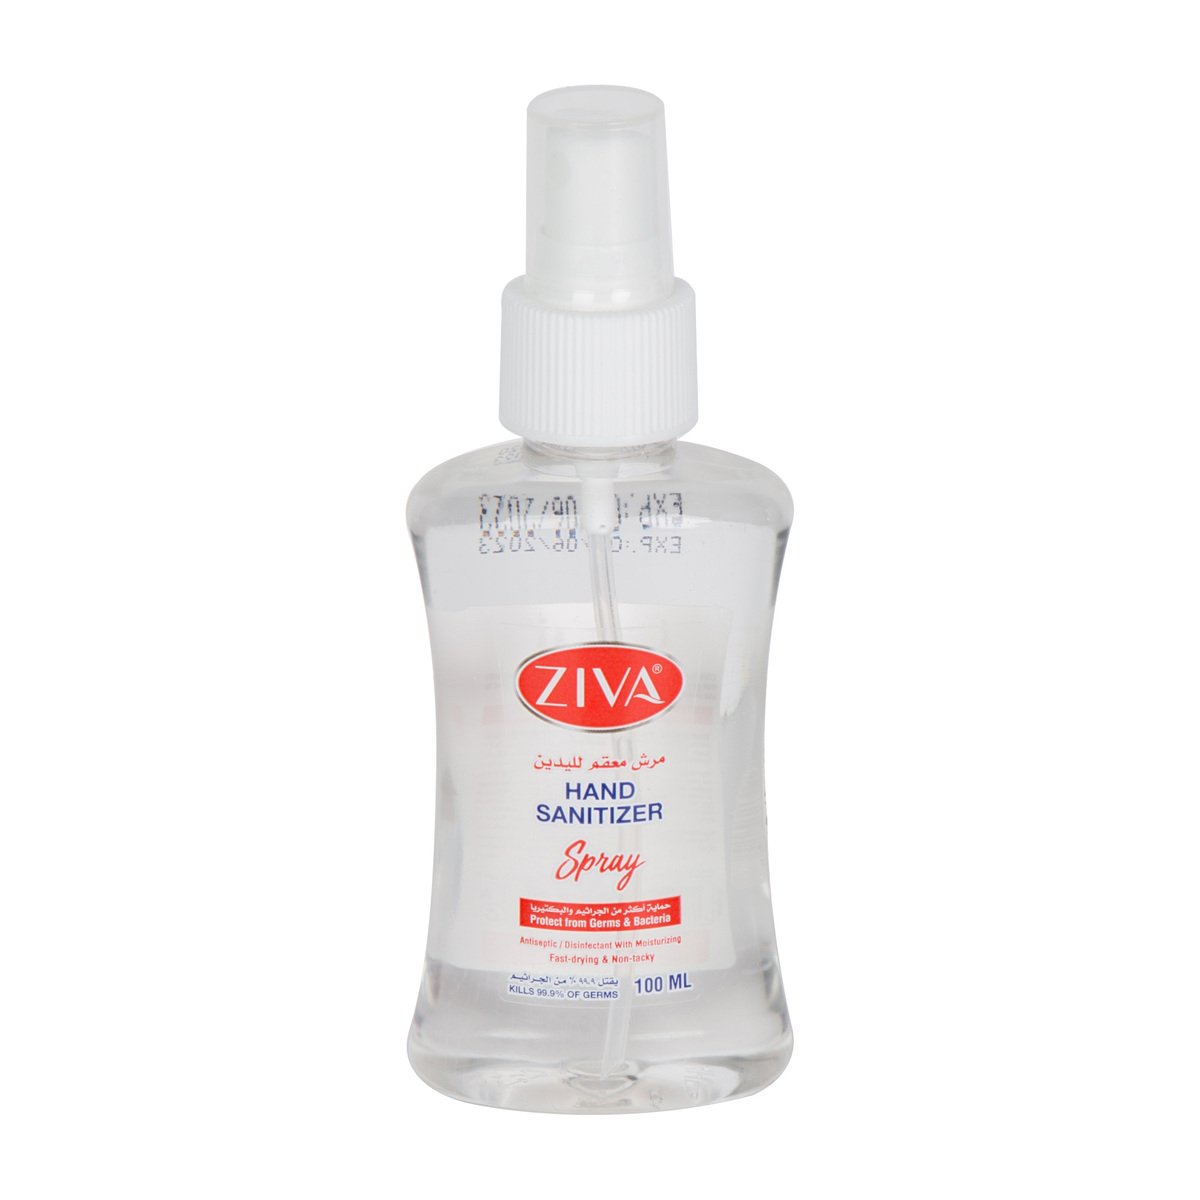 Ziva Hand Sanitizer Spray 100 ml